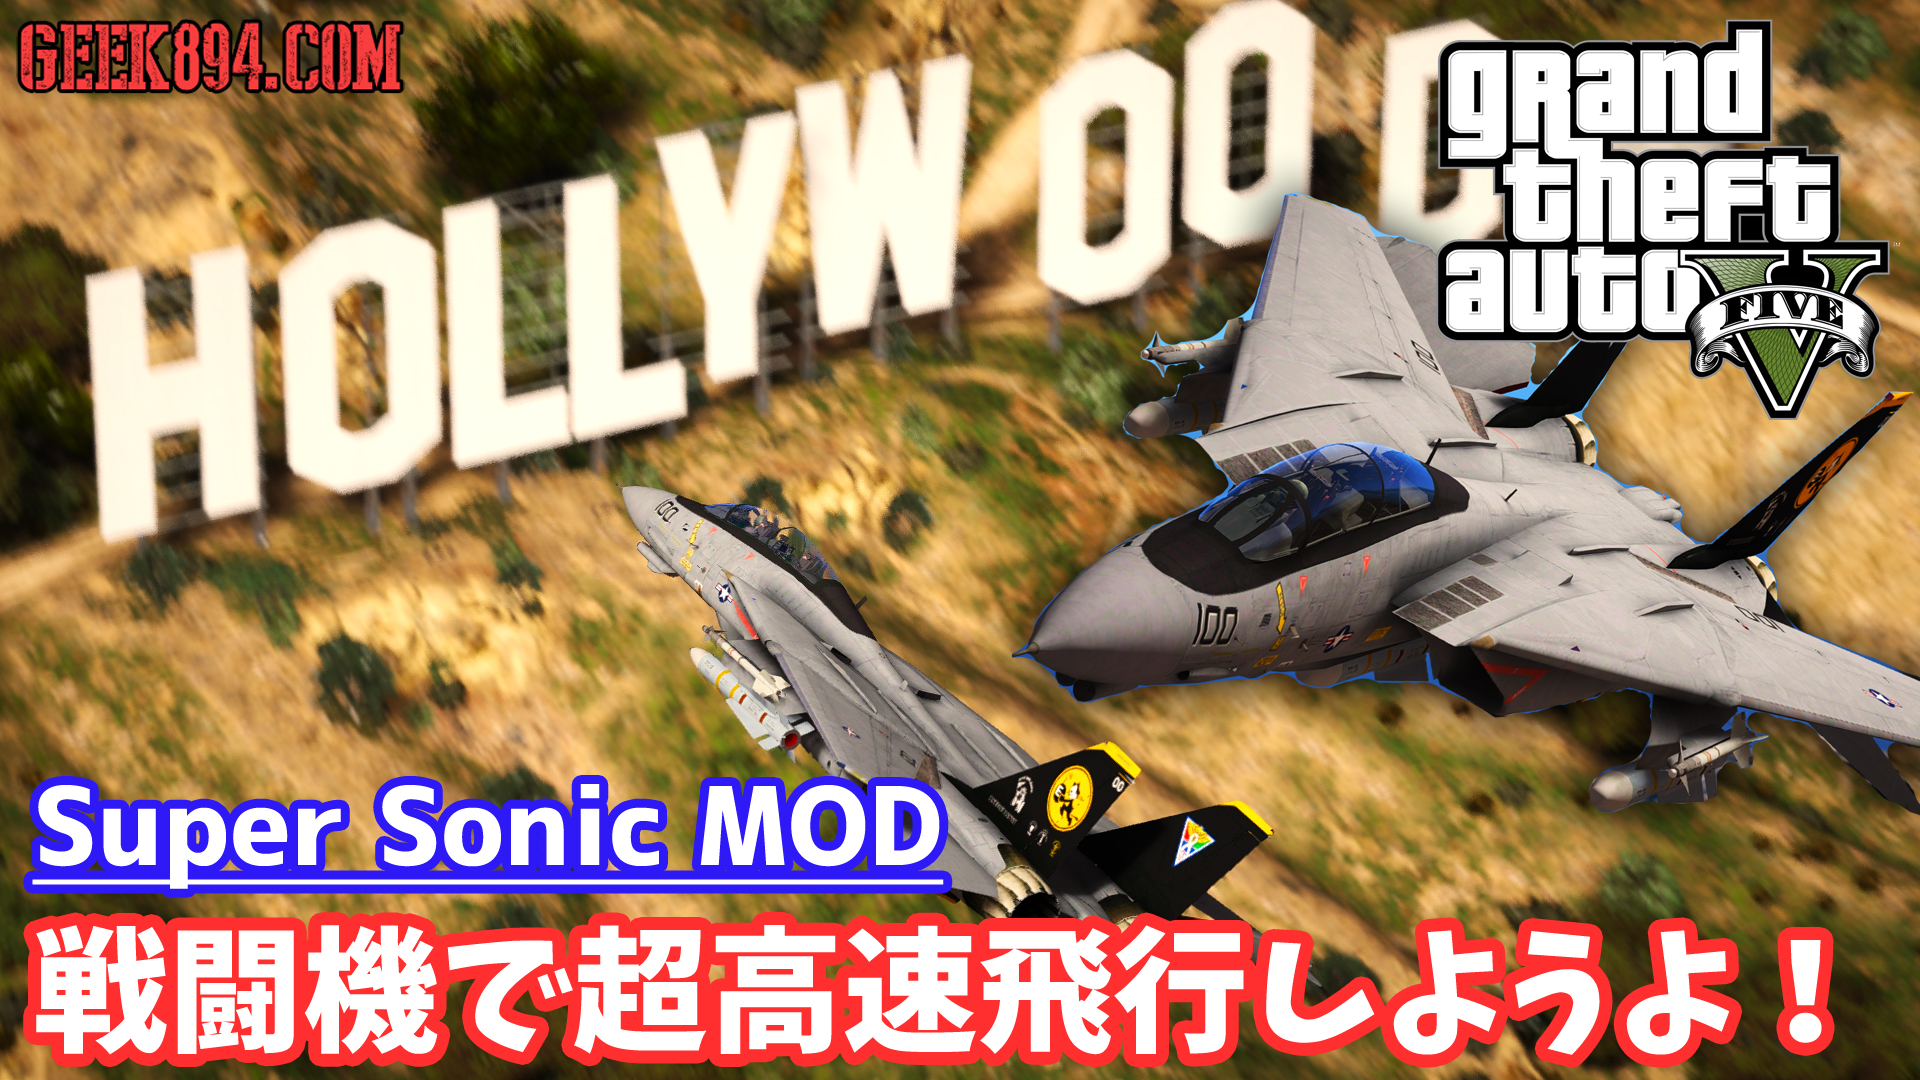 Gta5の戦闘機を超高速飛行させるmod Super Sonic Modの導入方法の解説と動画 Geek894 Com